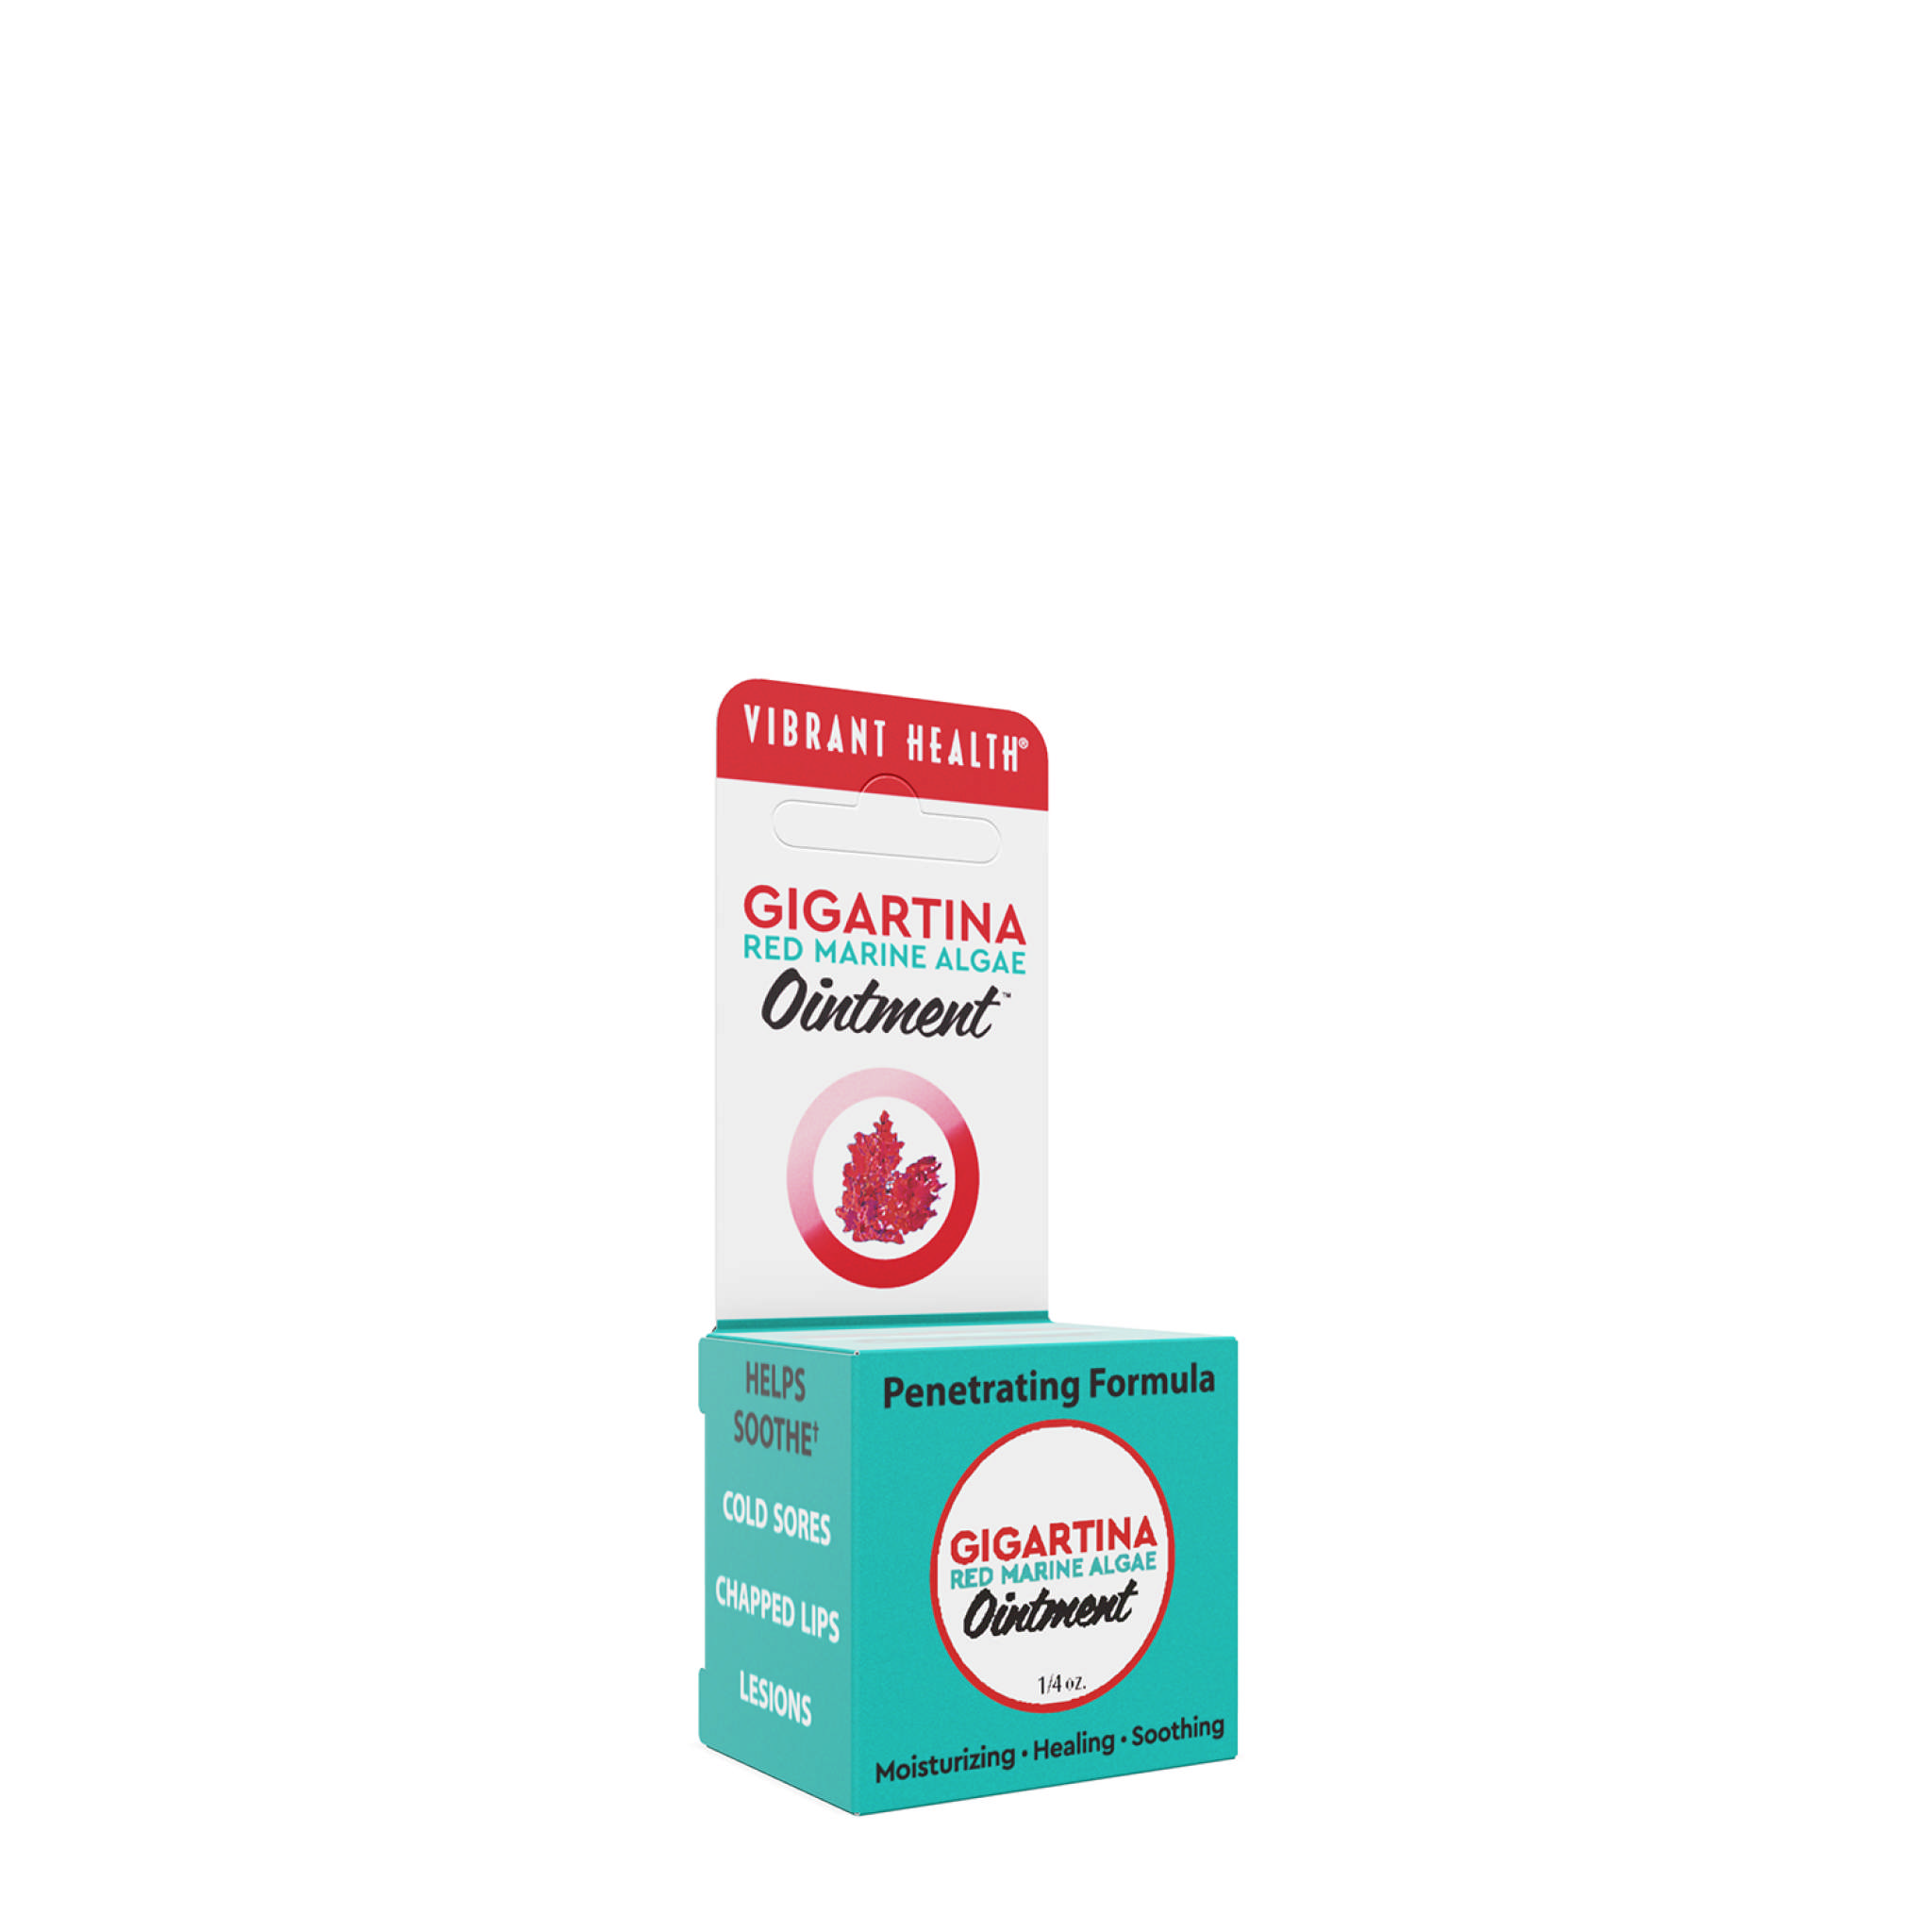 Vibrant Health - Rma Healing Ointment Gigartina